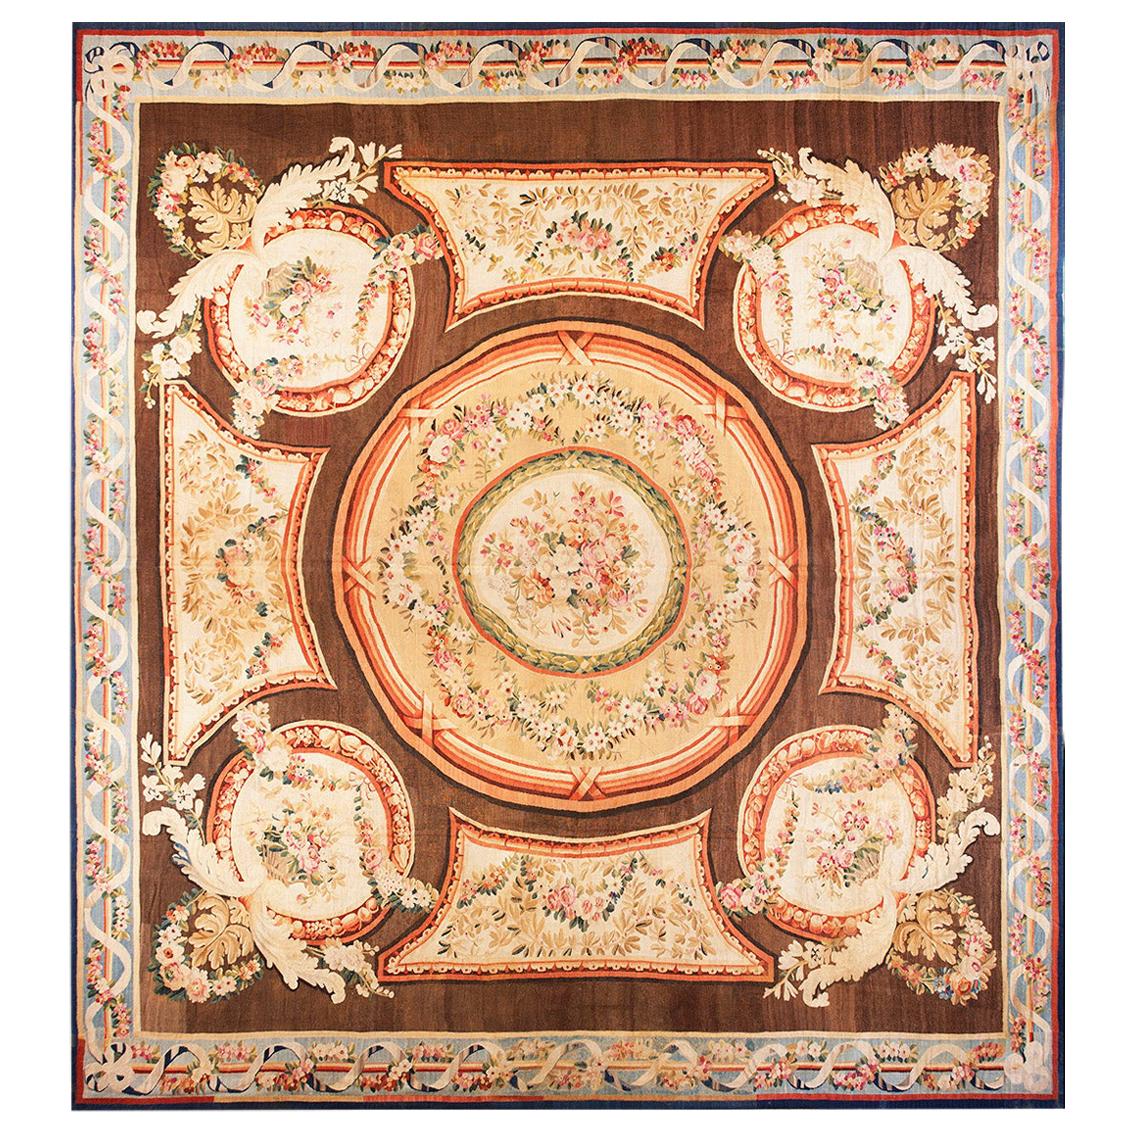 Antique French Aubusson Carpet - Louis XVI Period 